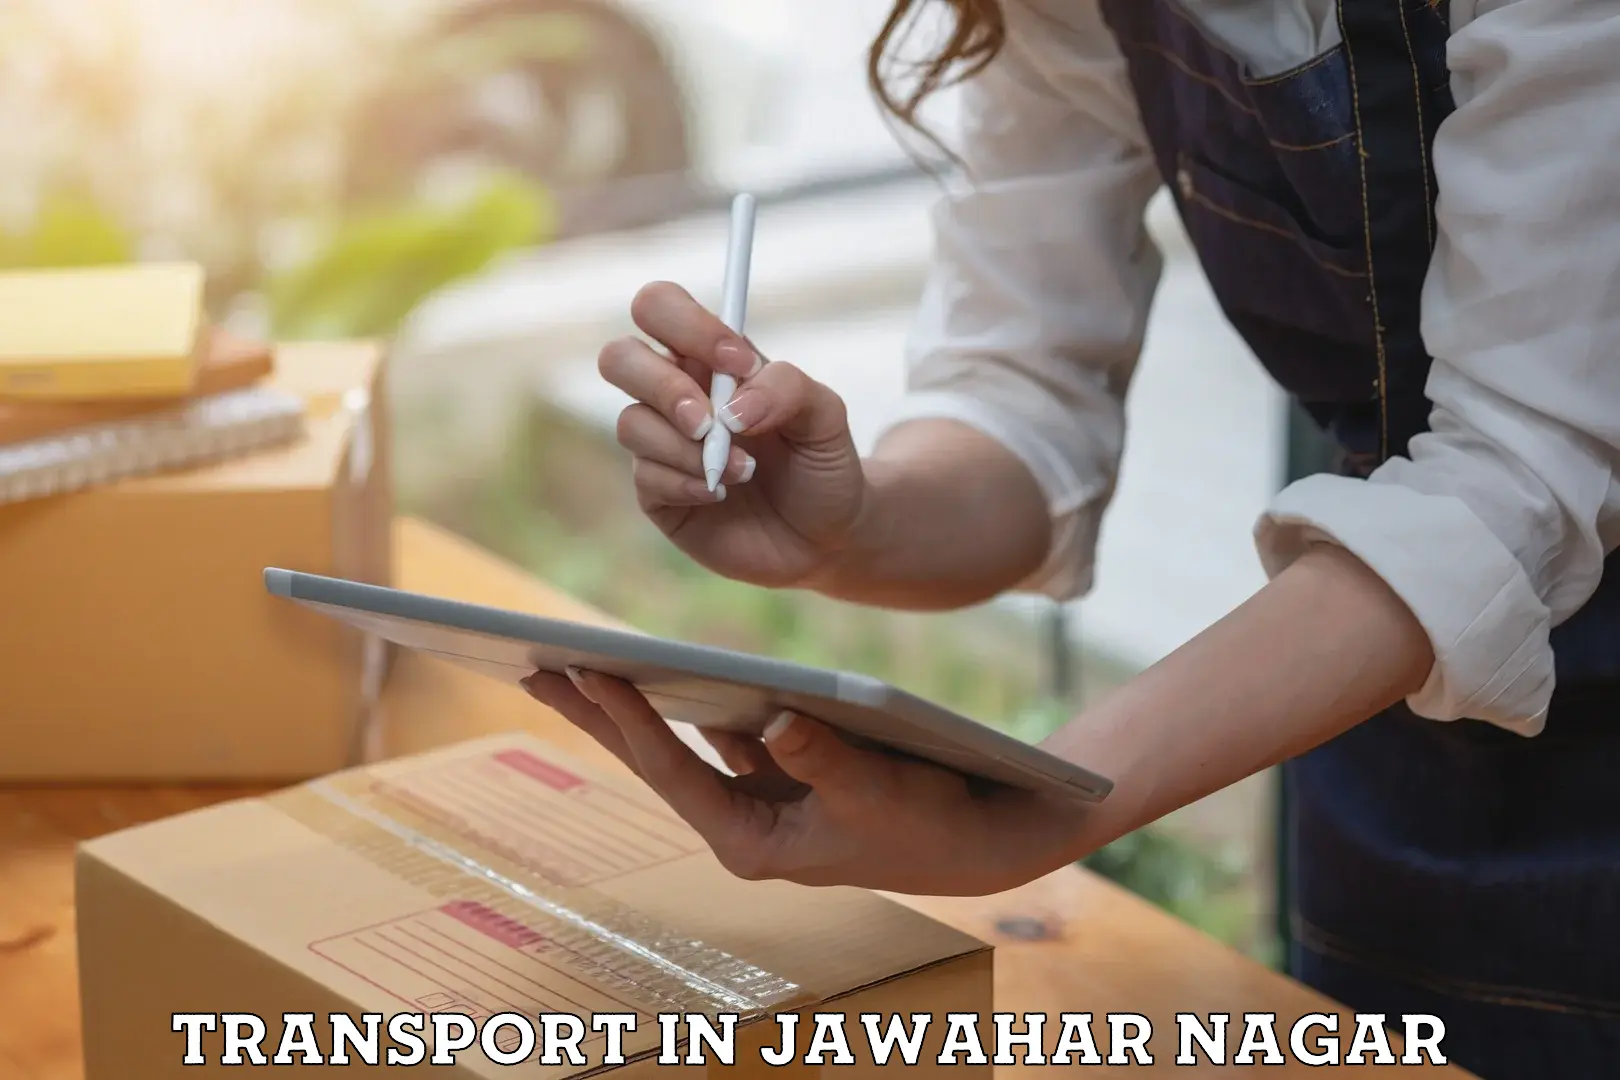 Truck transport companies in India in Jawahar Nagar